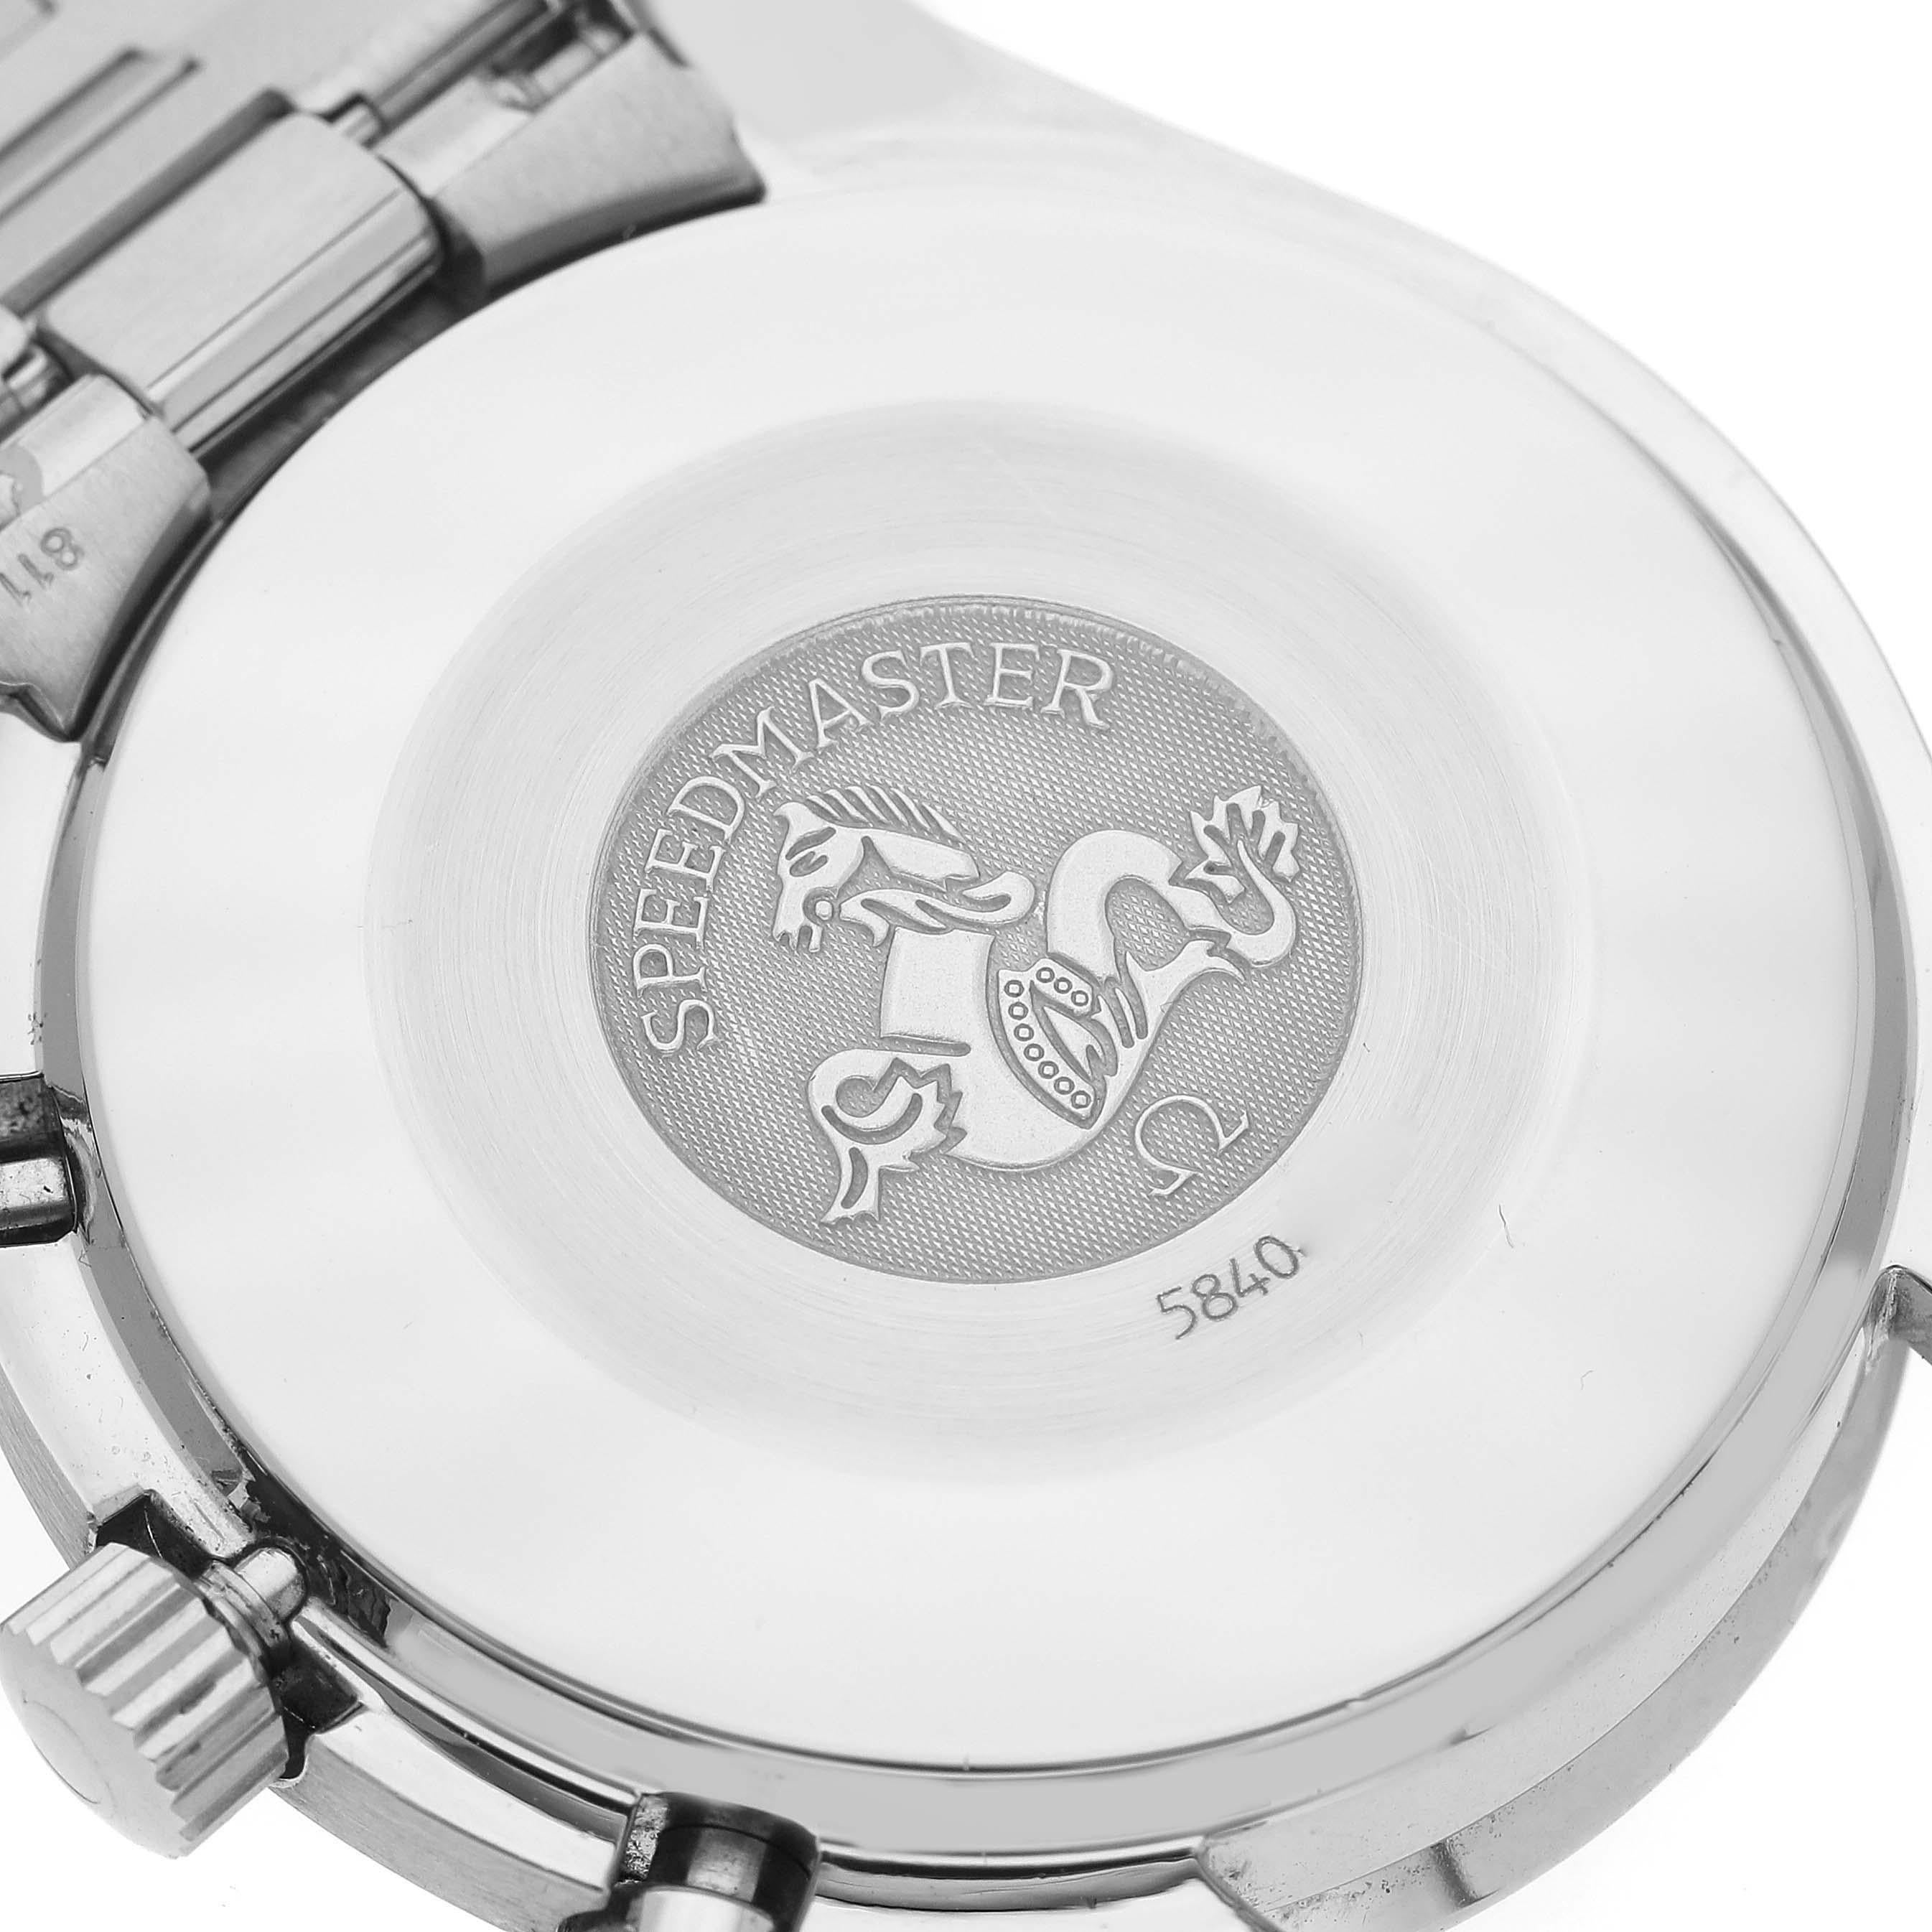 Omega Speedmaster Reduced Marui Limited Edition Steel Watch 3510.21.00 Box Card 2